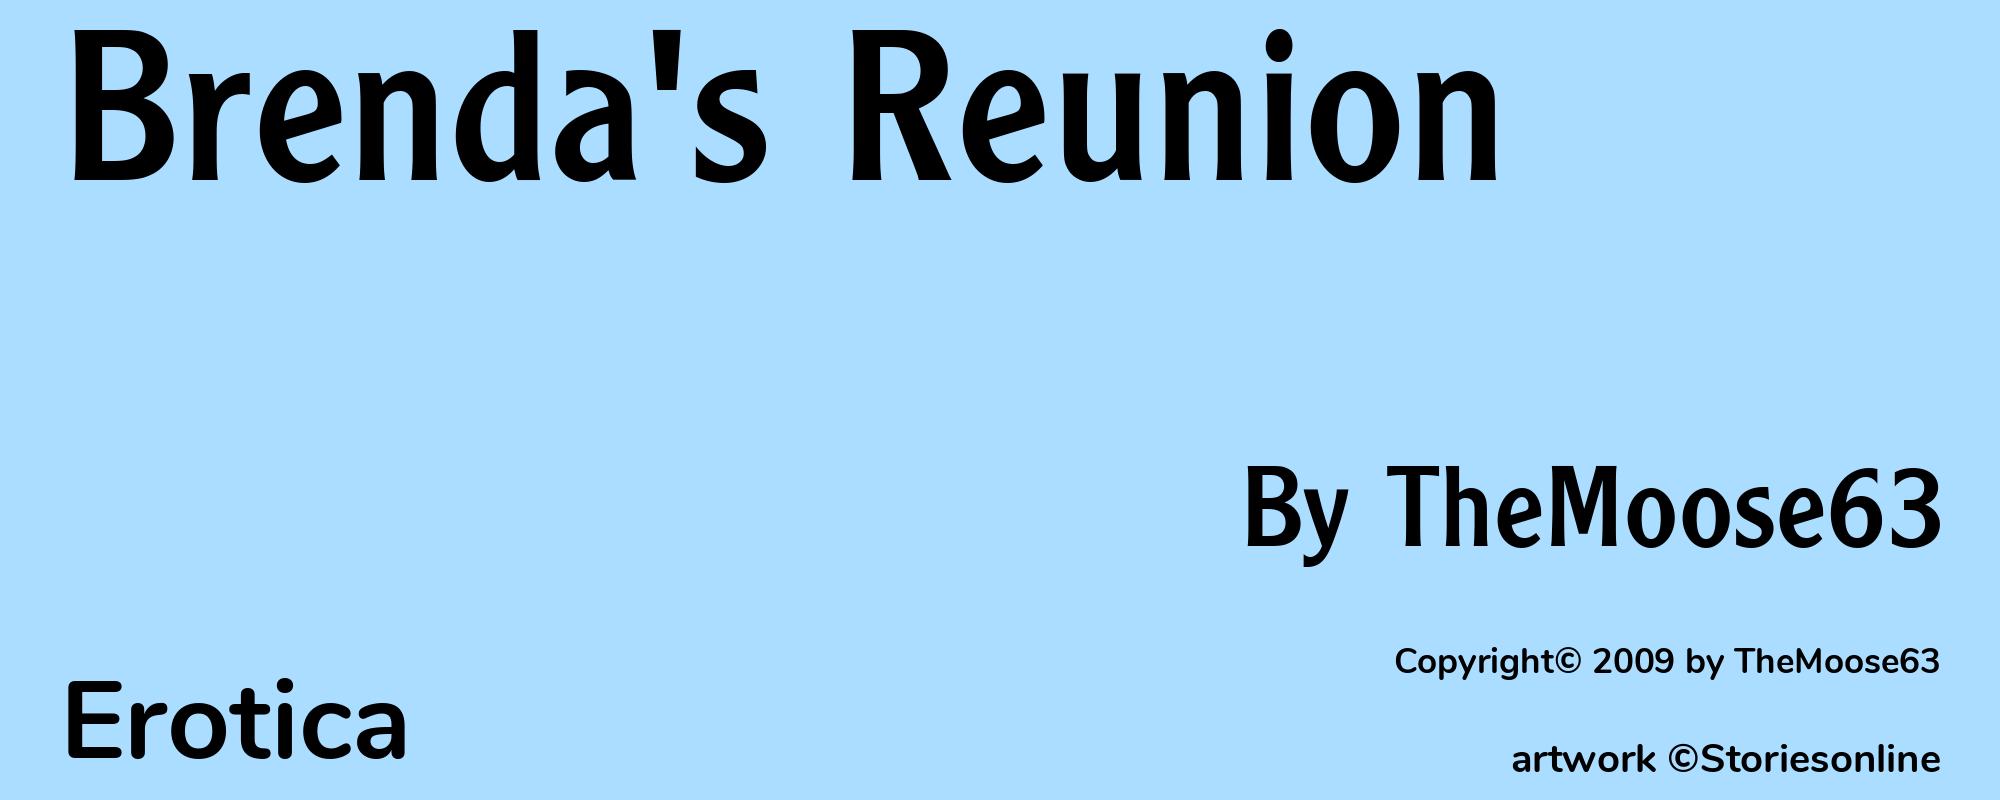 Brenda's Reunion - Cover